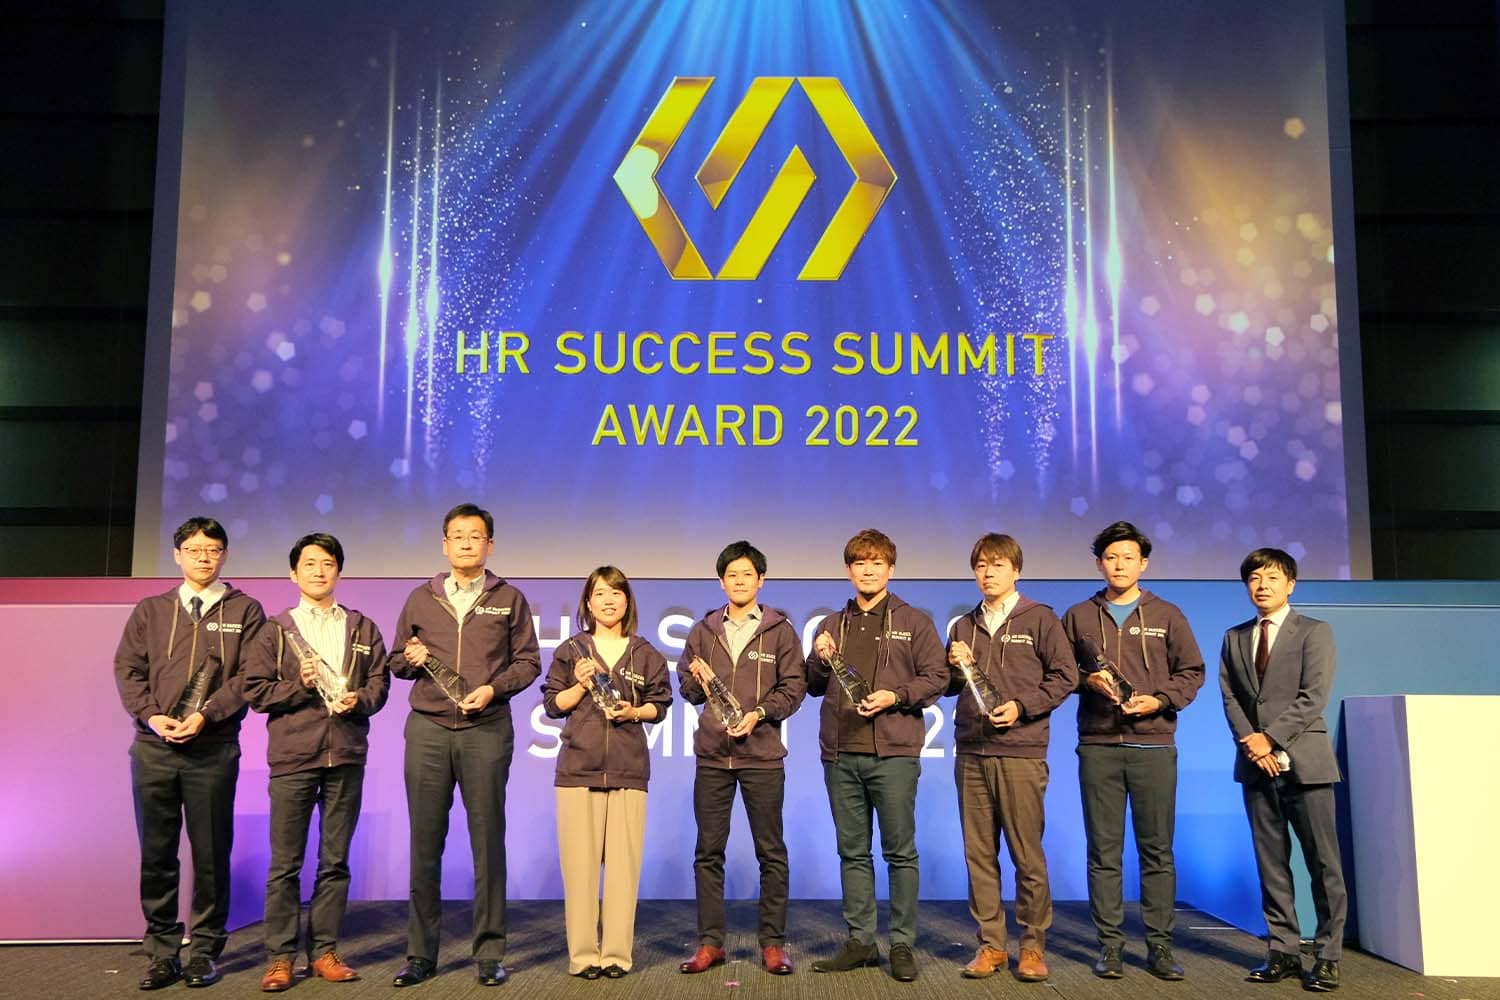 HR SUCCESS SUMMIT アワード 2022